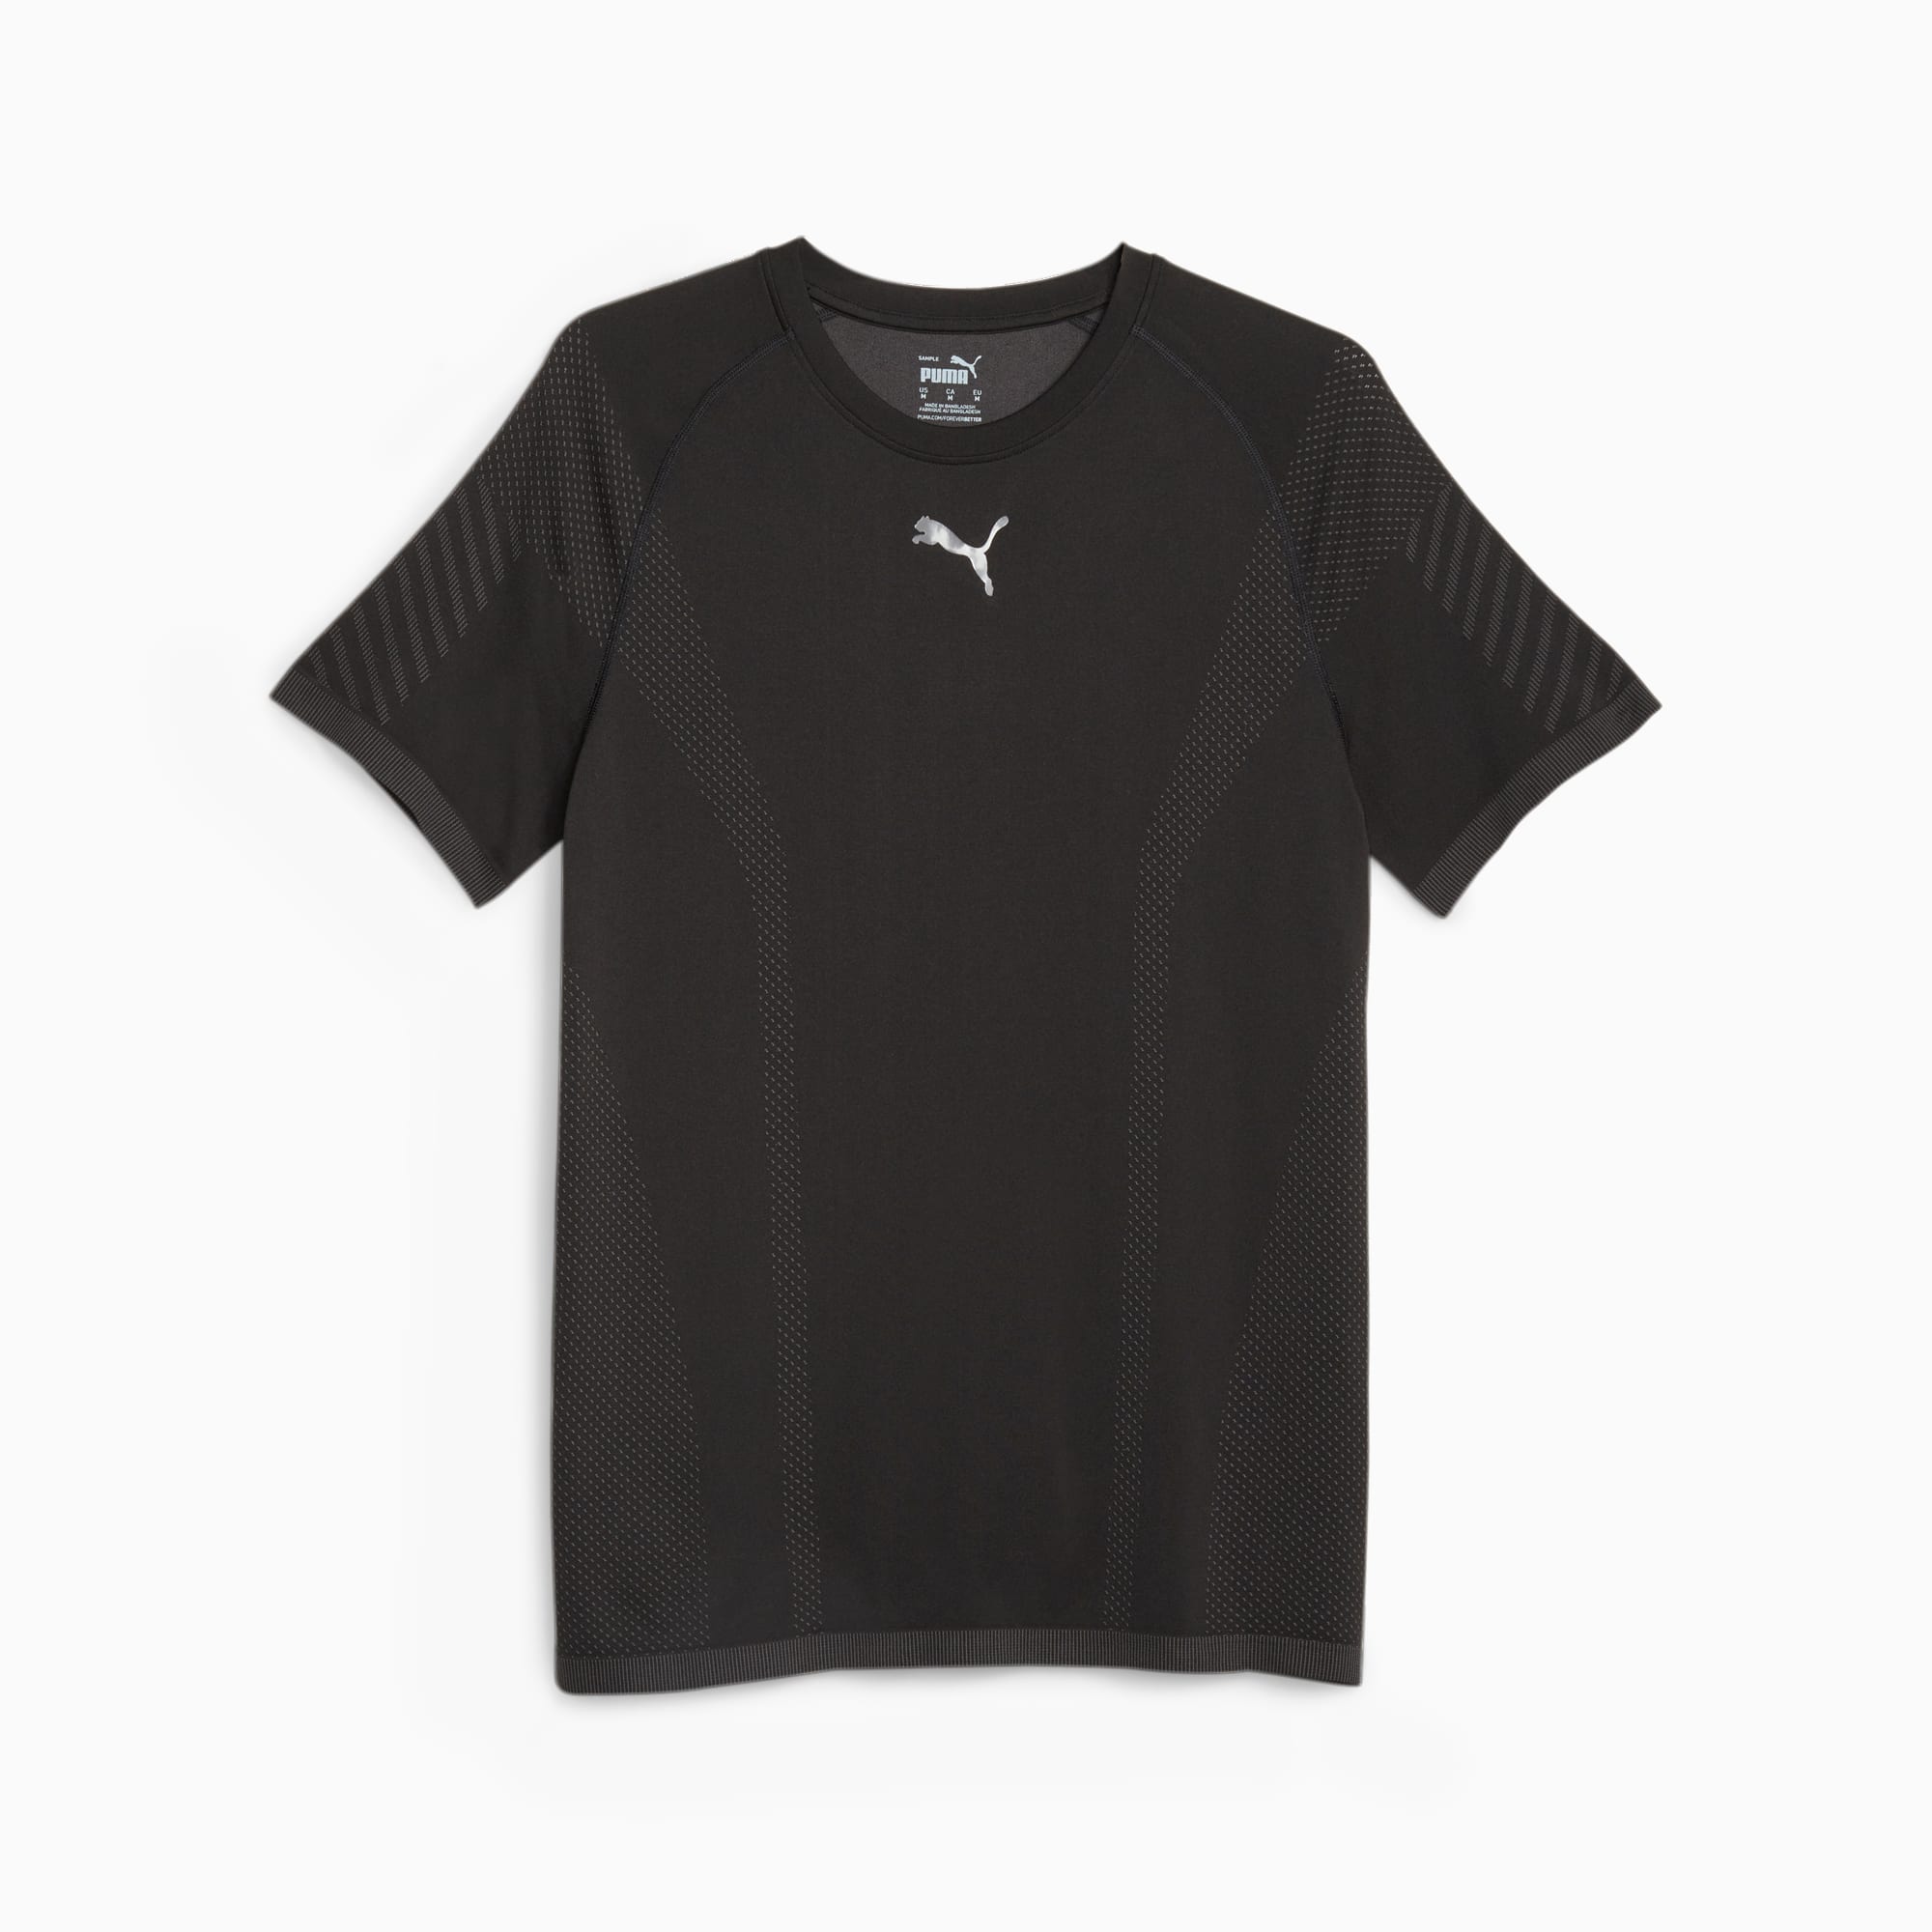 Puma Training Formknit seamless t-shirt in black